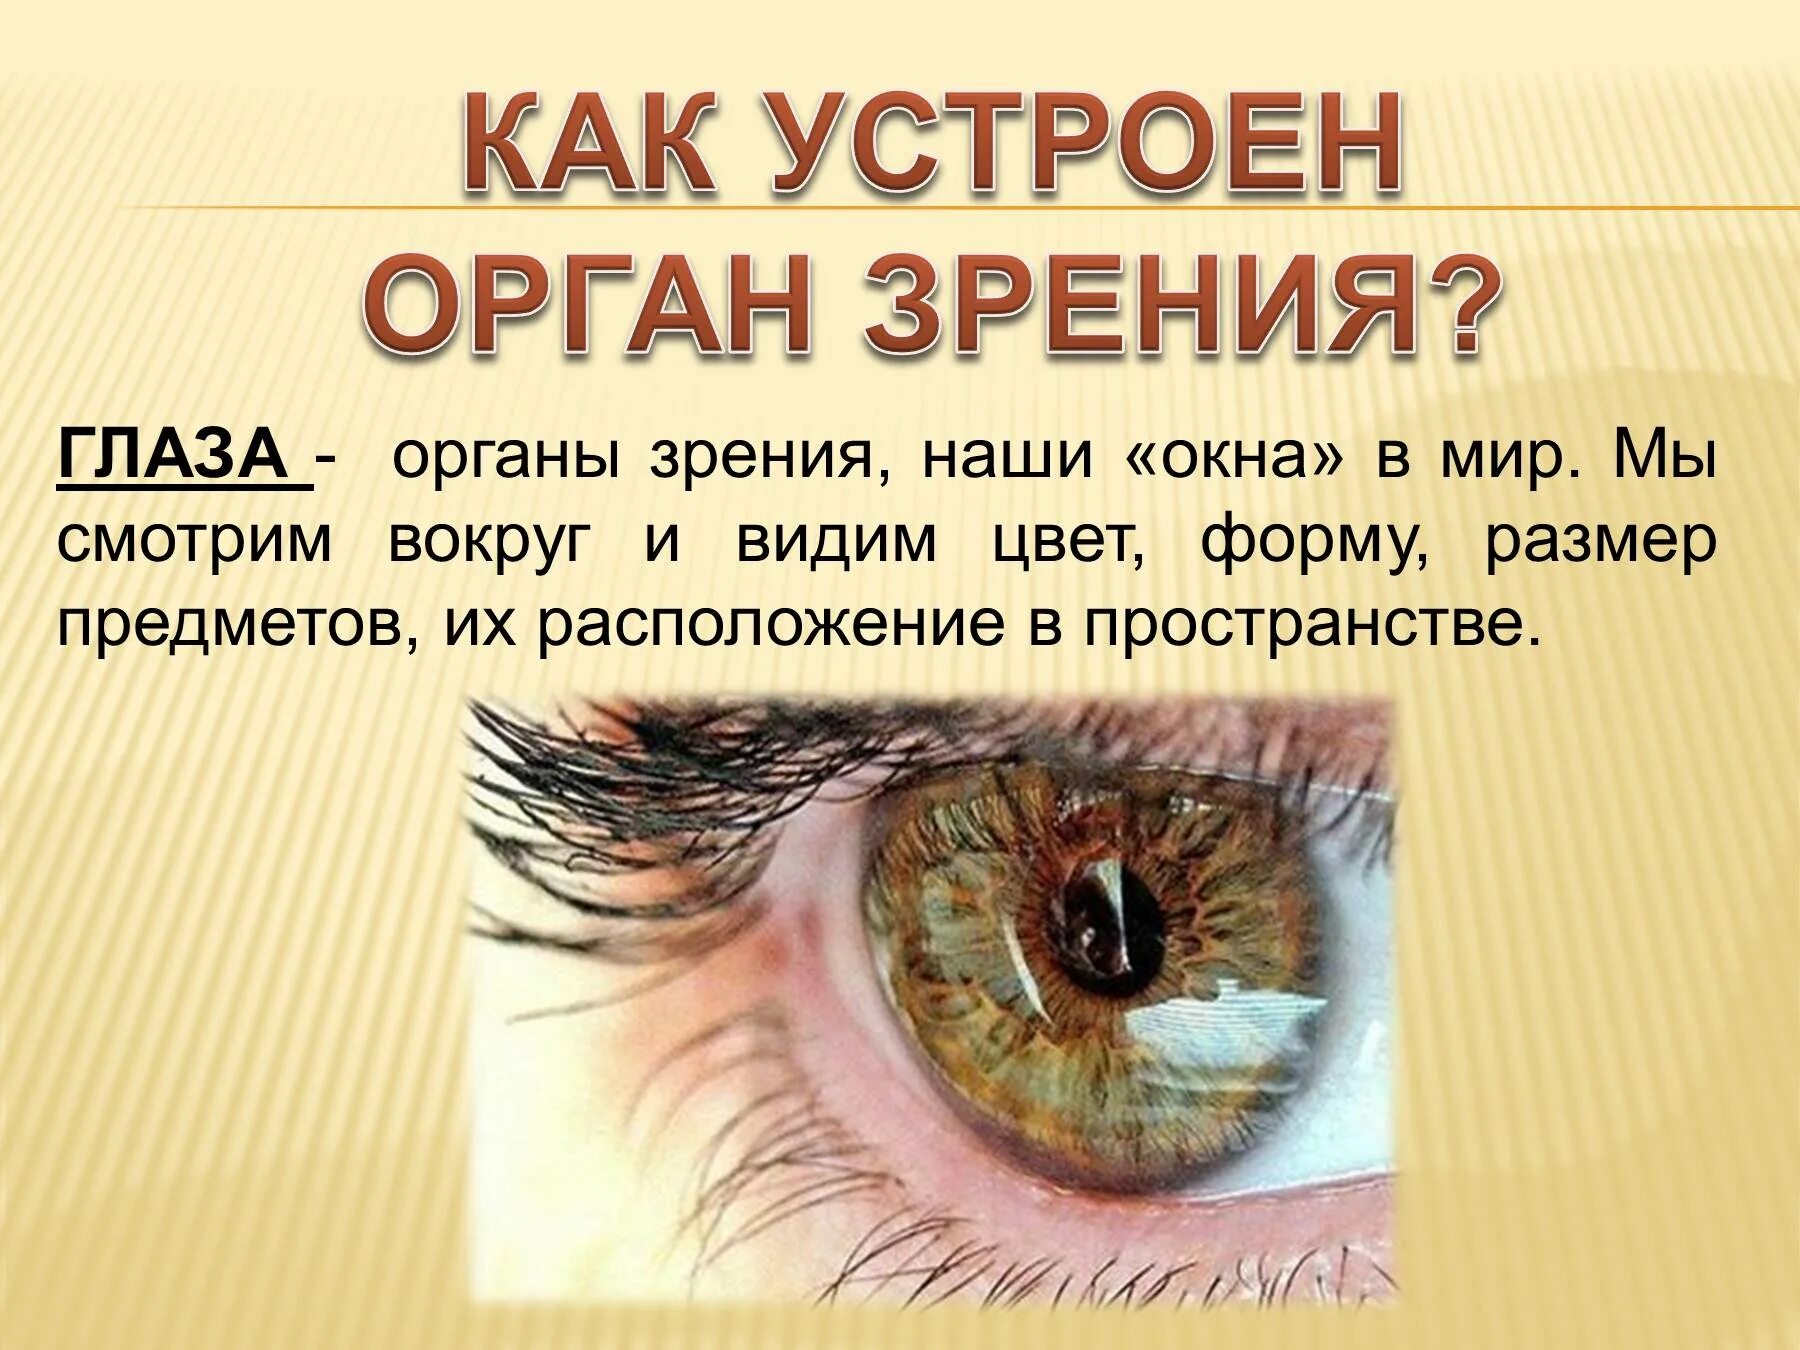 Тест по теме органы зрения. Орган зрения презентация. Презентация на тему зрение человека. Презентация на тему органы зрения. Органы чувств глаза.